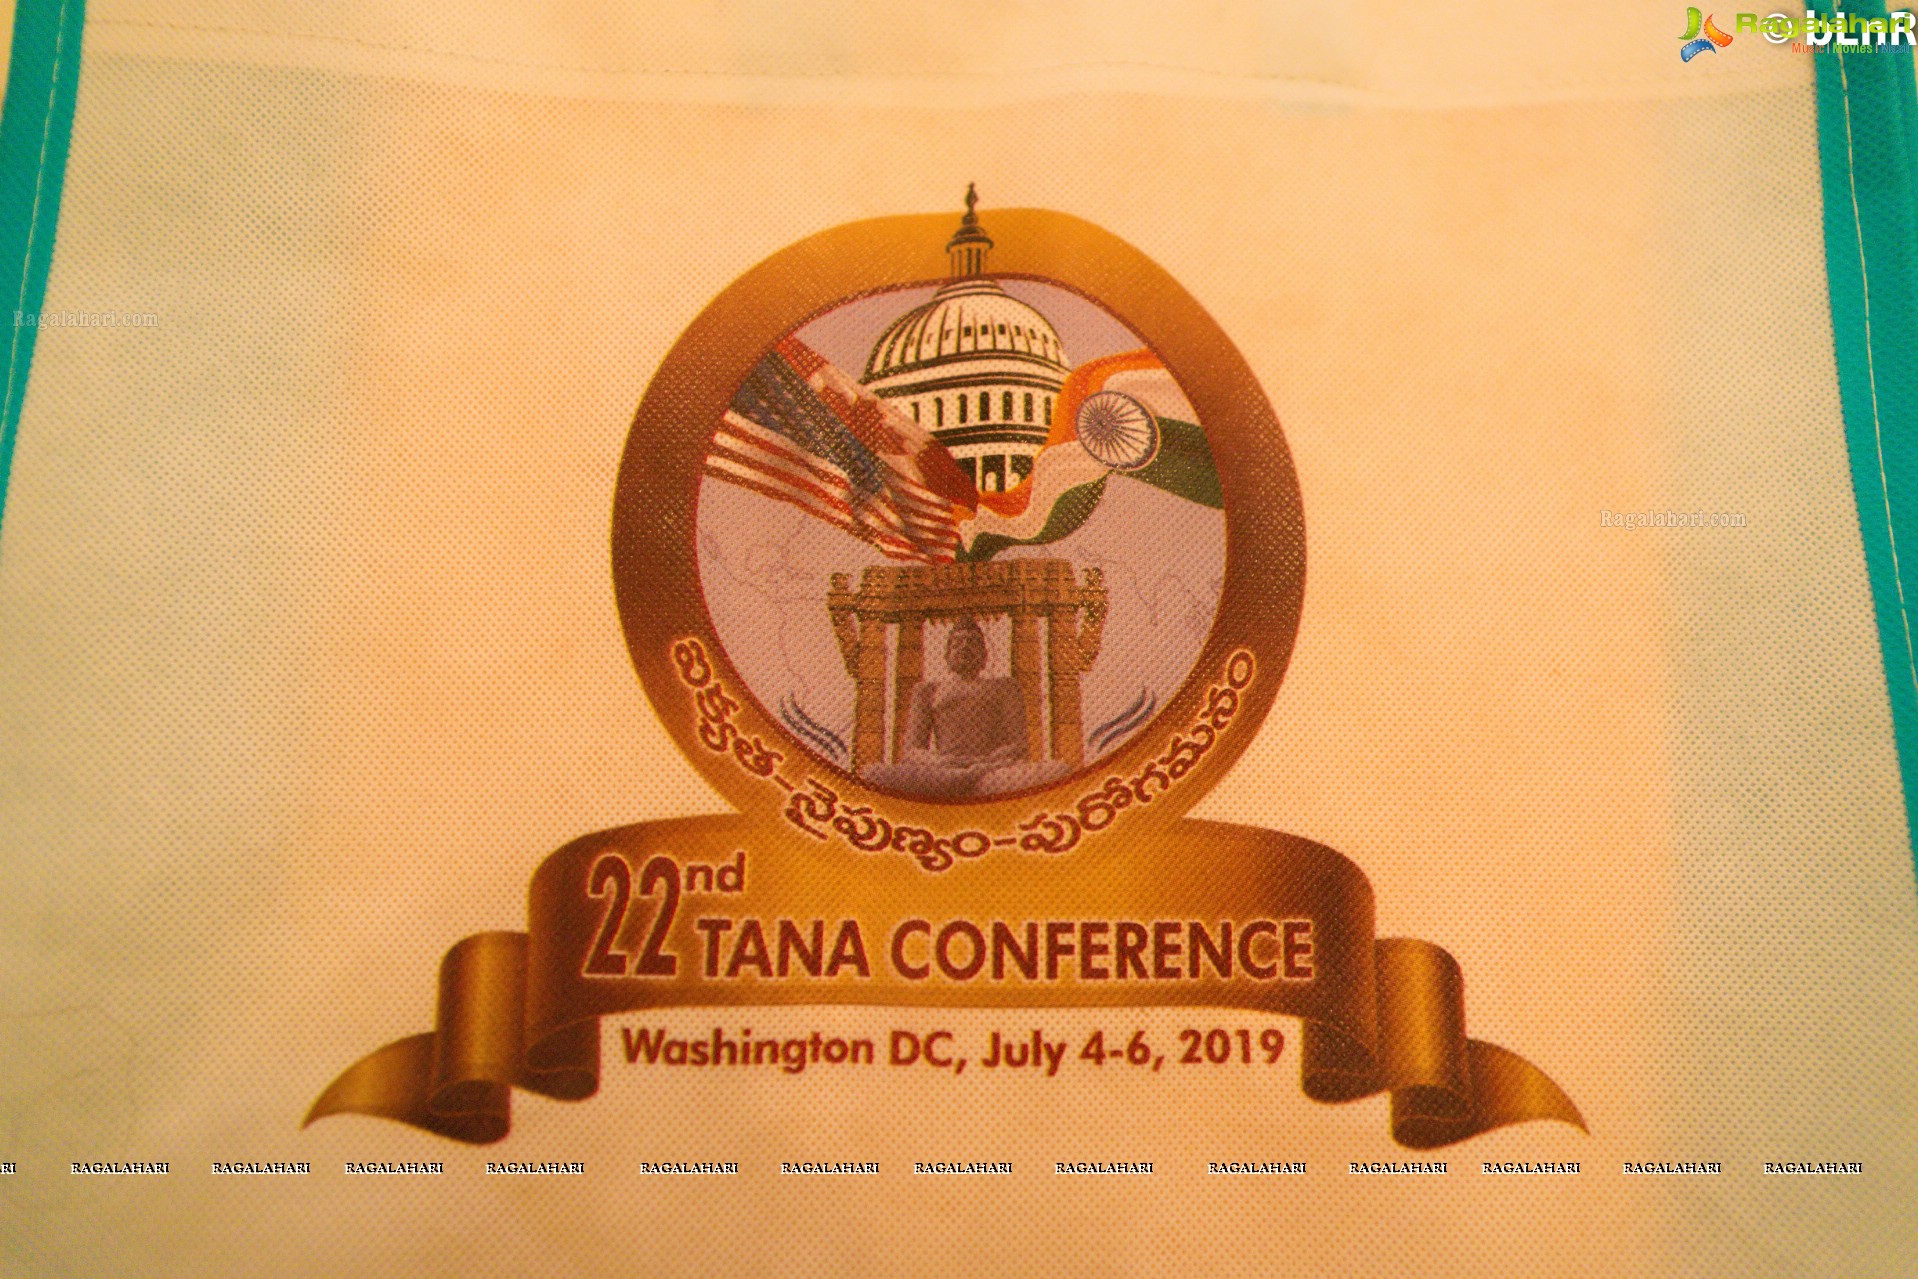 TANA 22nd Convention Banquet Washington, D.C.